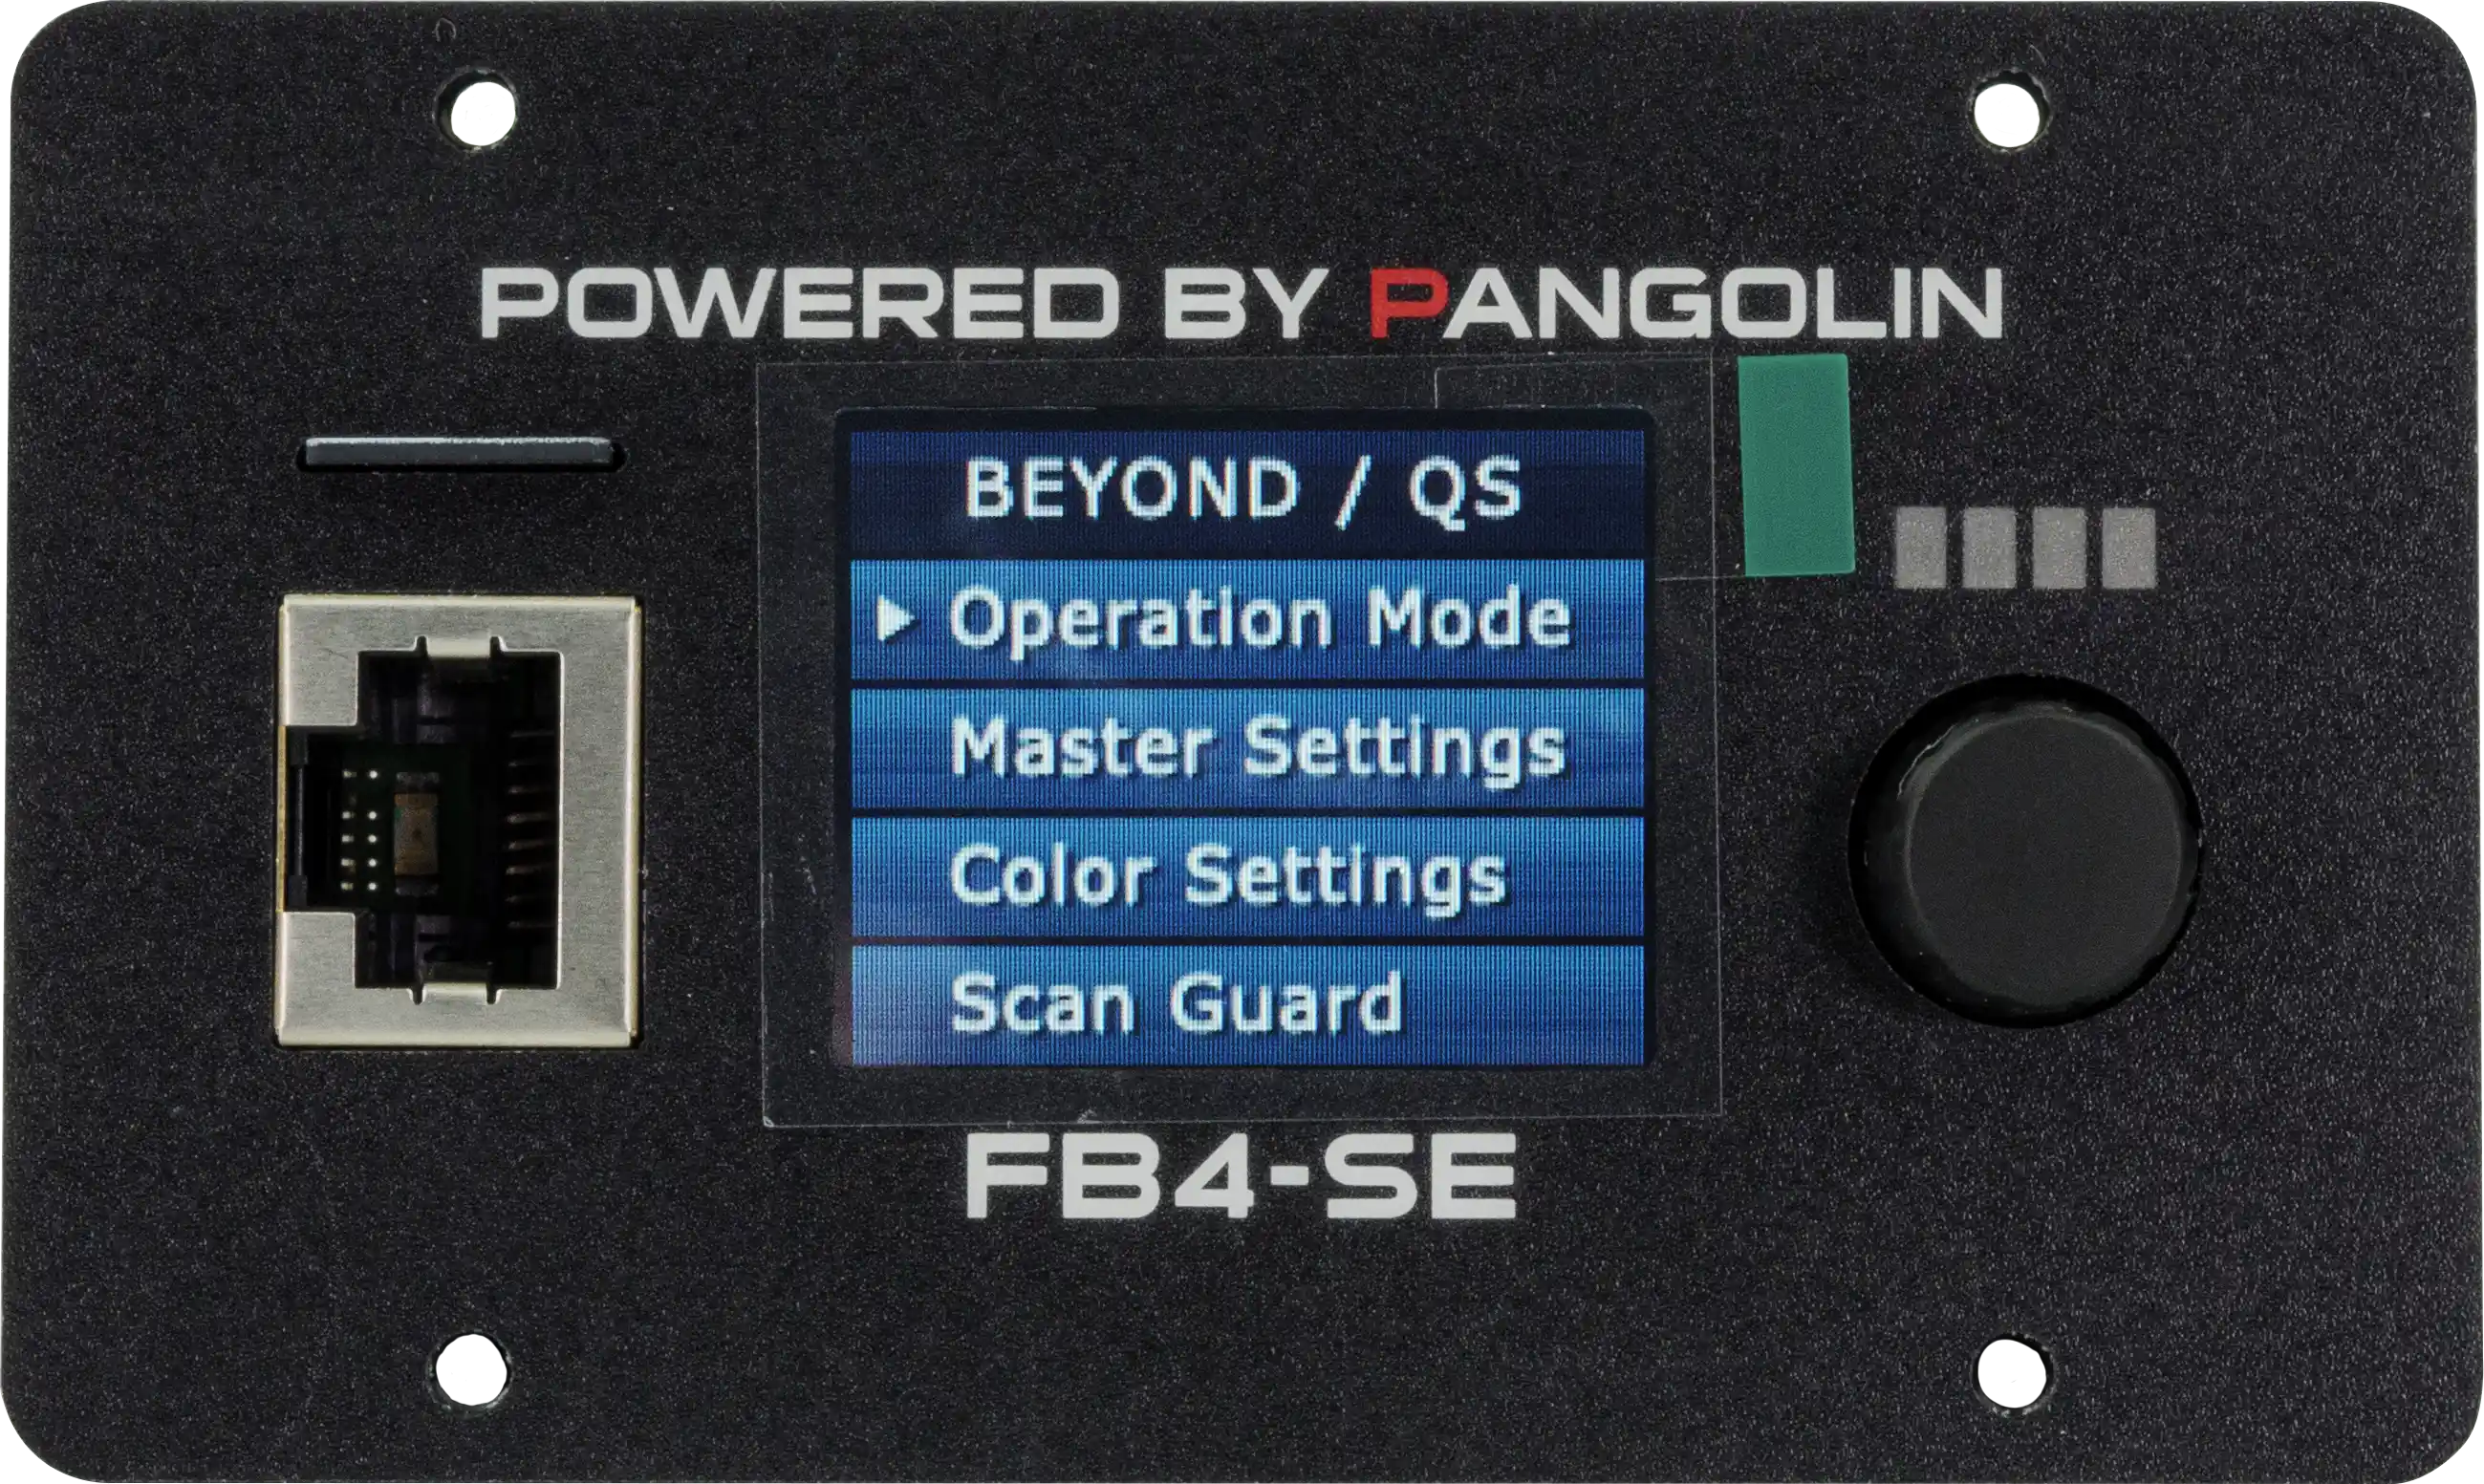 Pangolin FB4 hardware